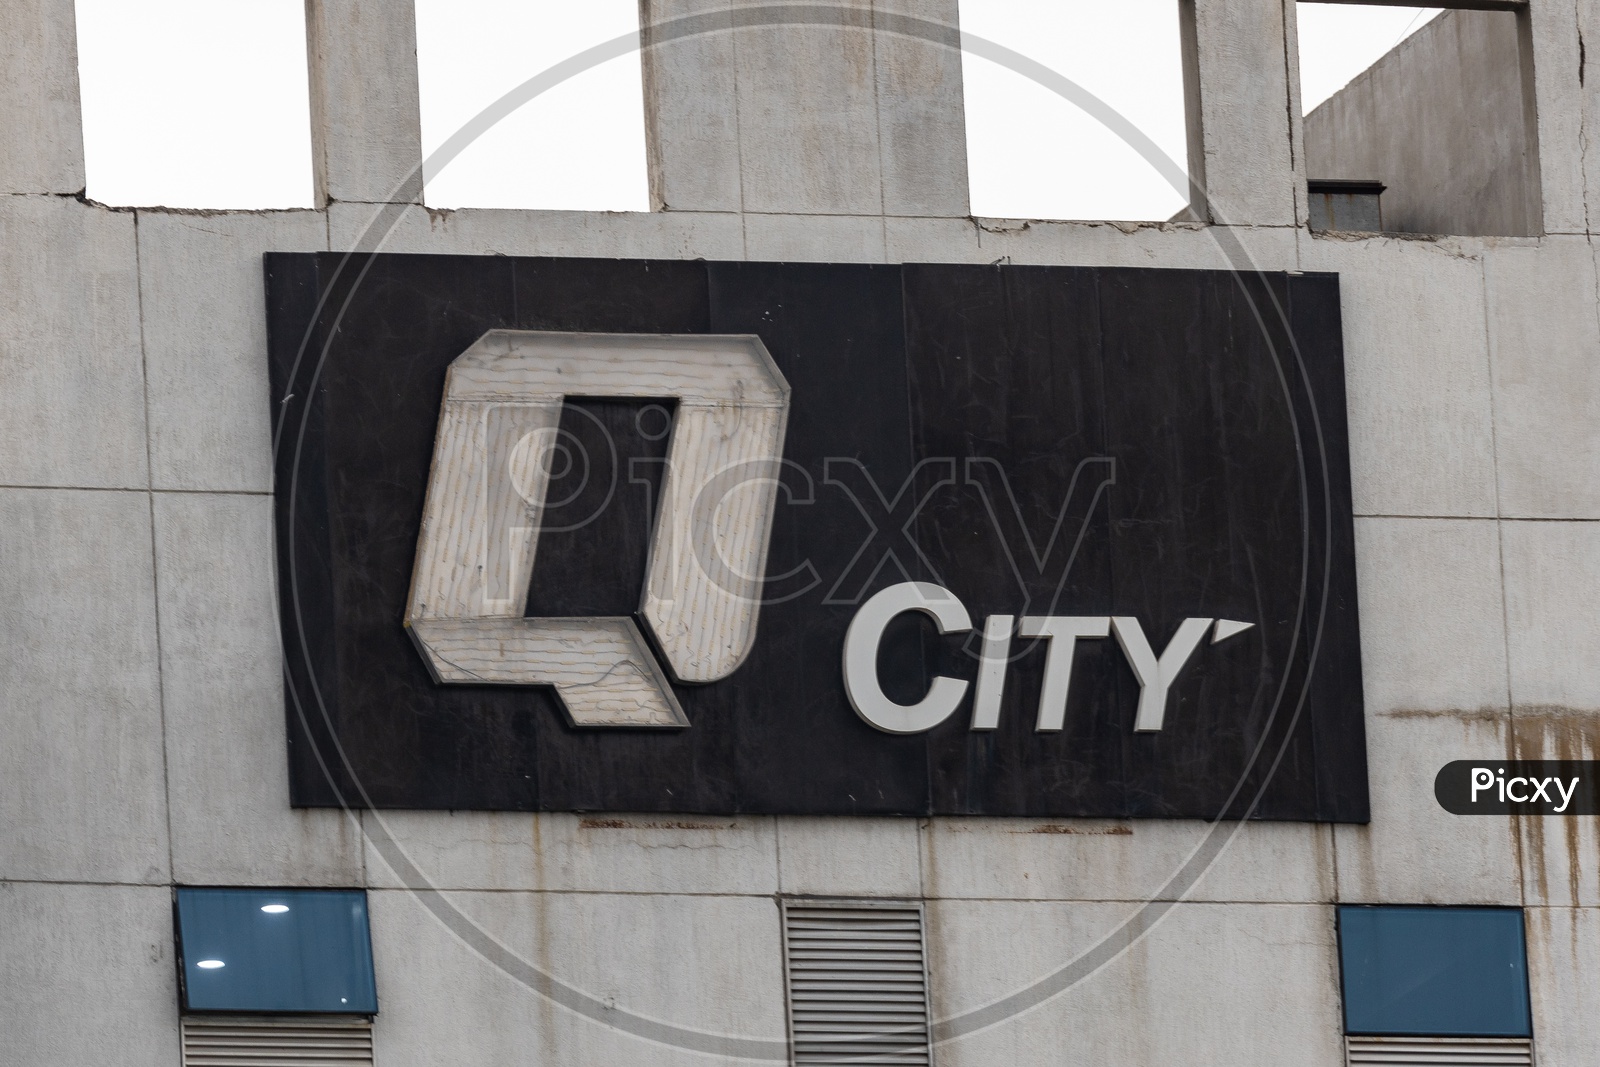 Q-city towers,nanakramguda